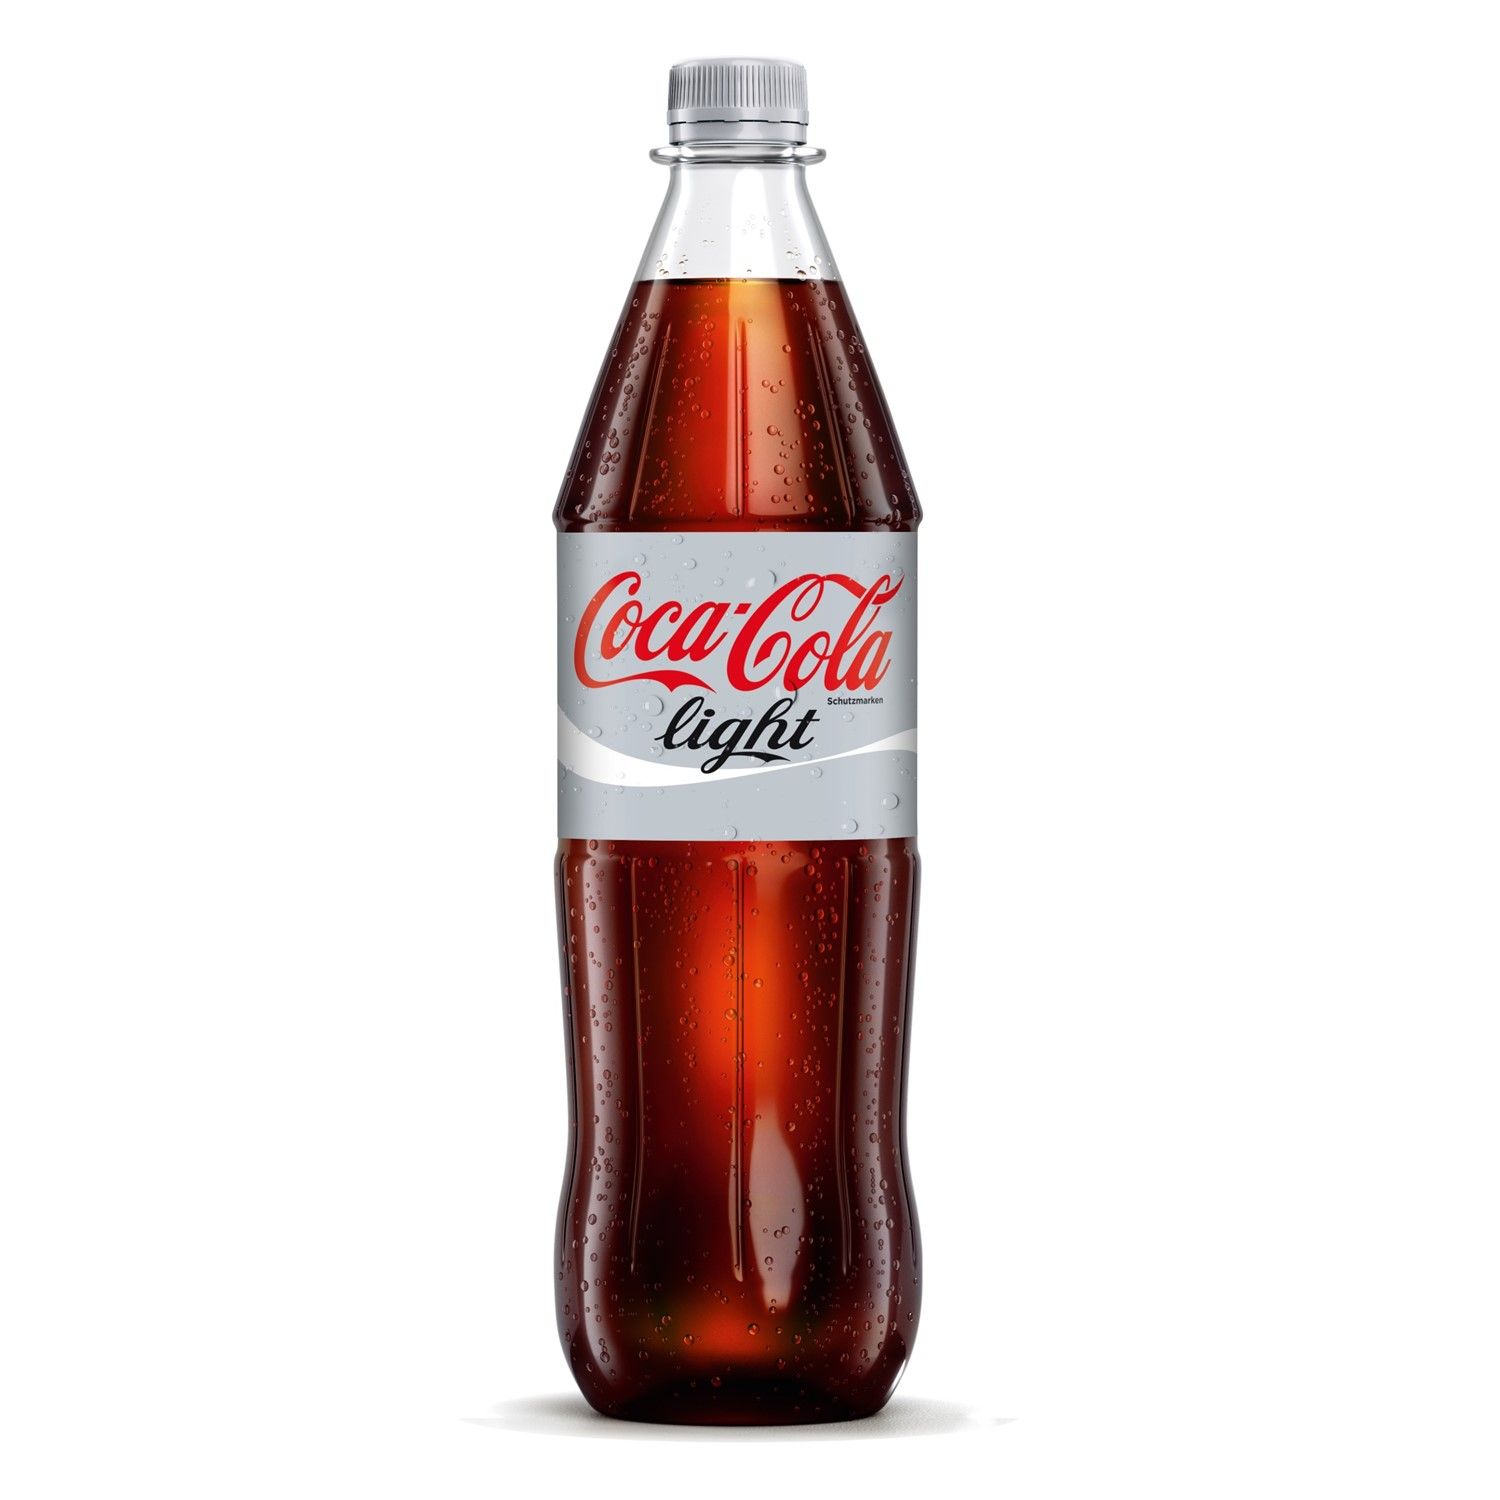 Coca - Cola light